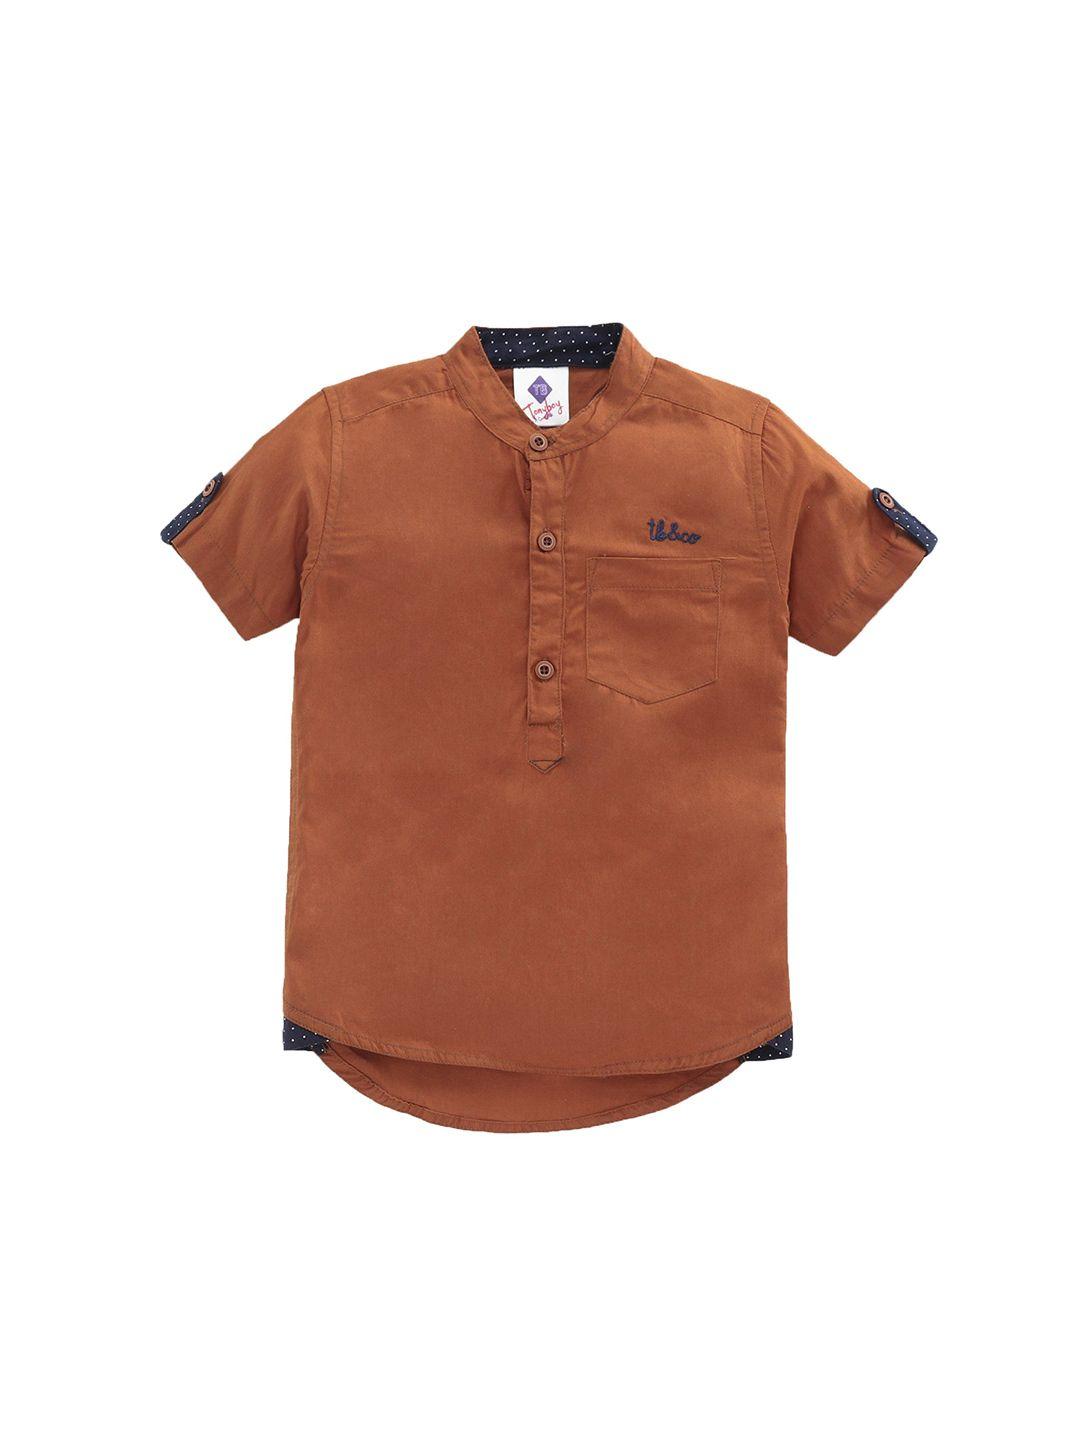 tonyboy boys rust premium casual cotton shirt